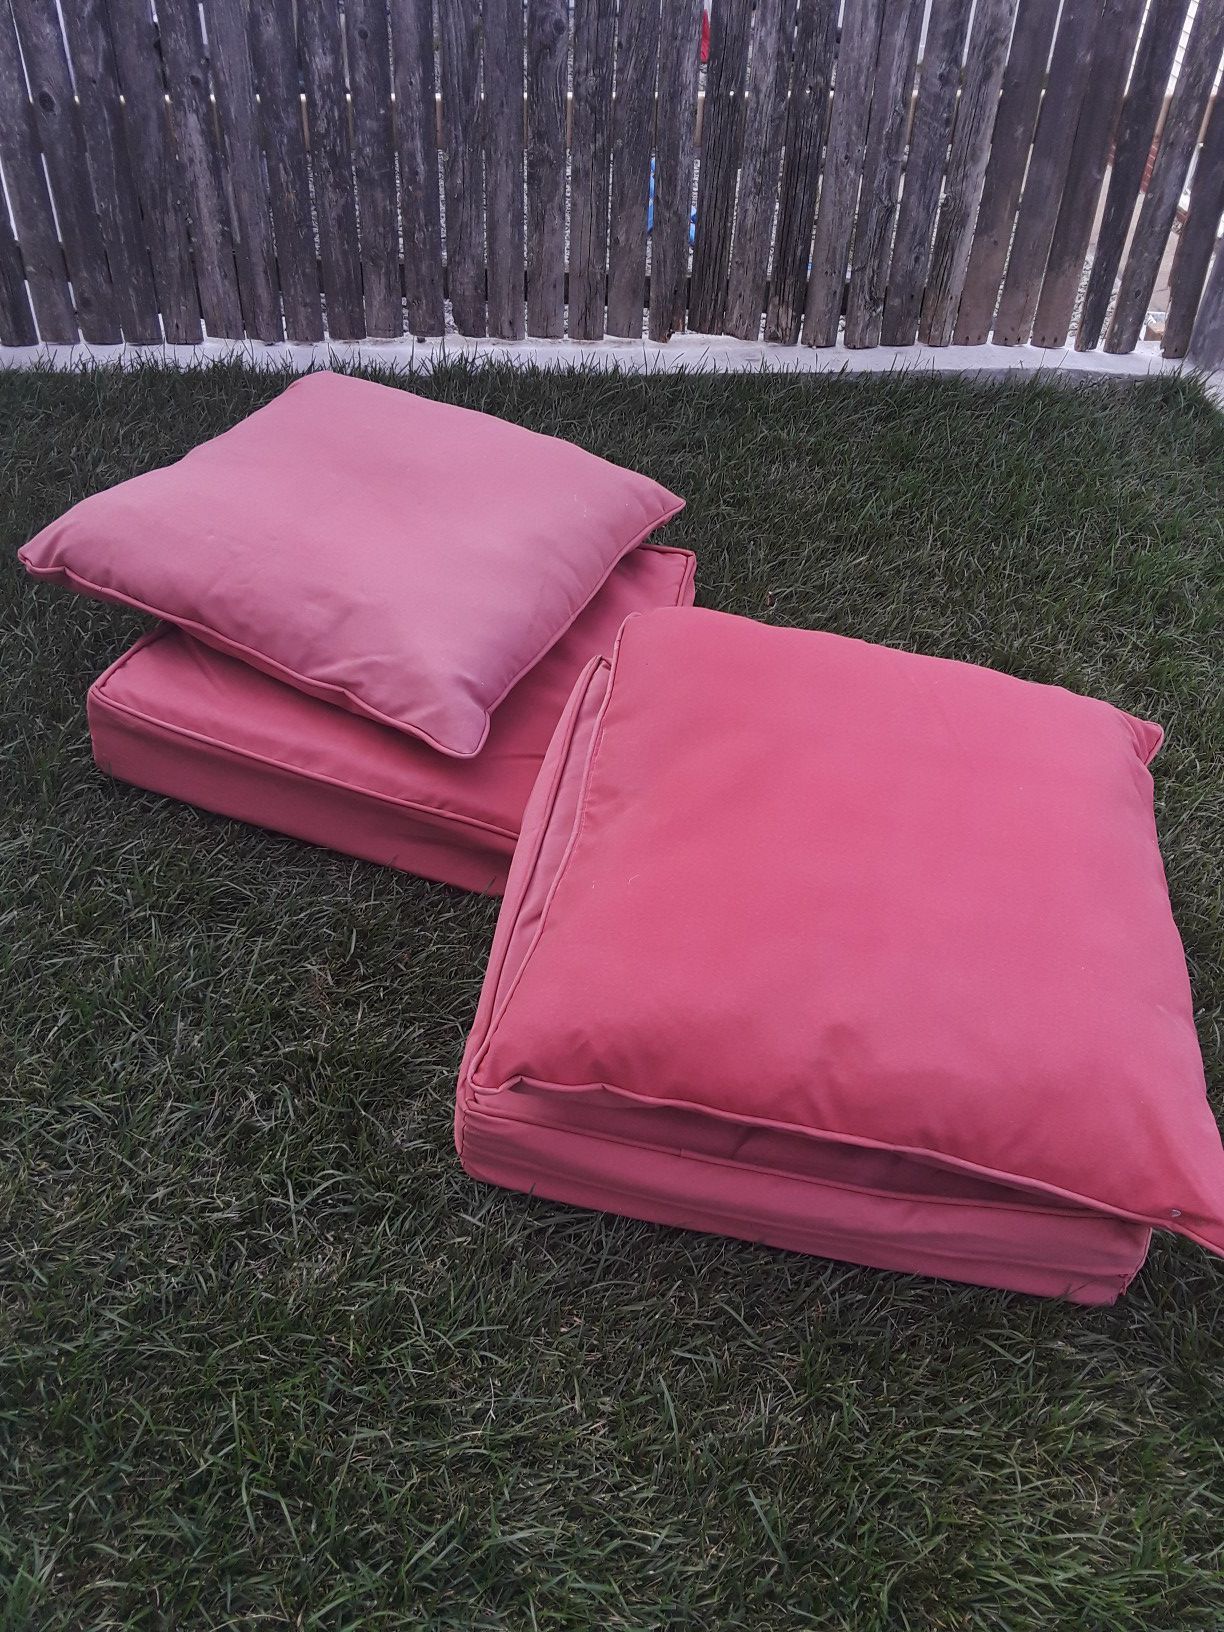 Outdoor deep cushion set 4 bottom 4 tops. 24x24